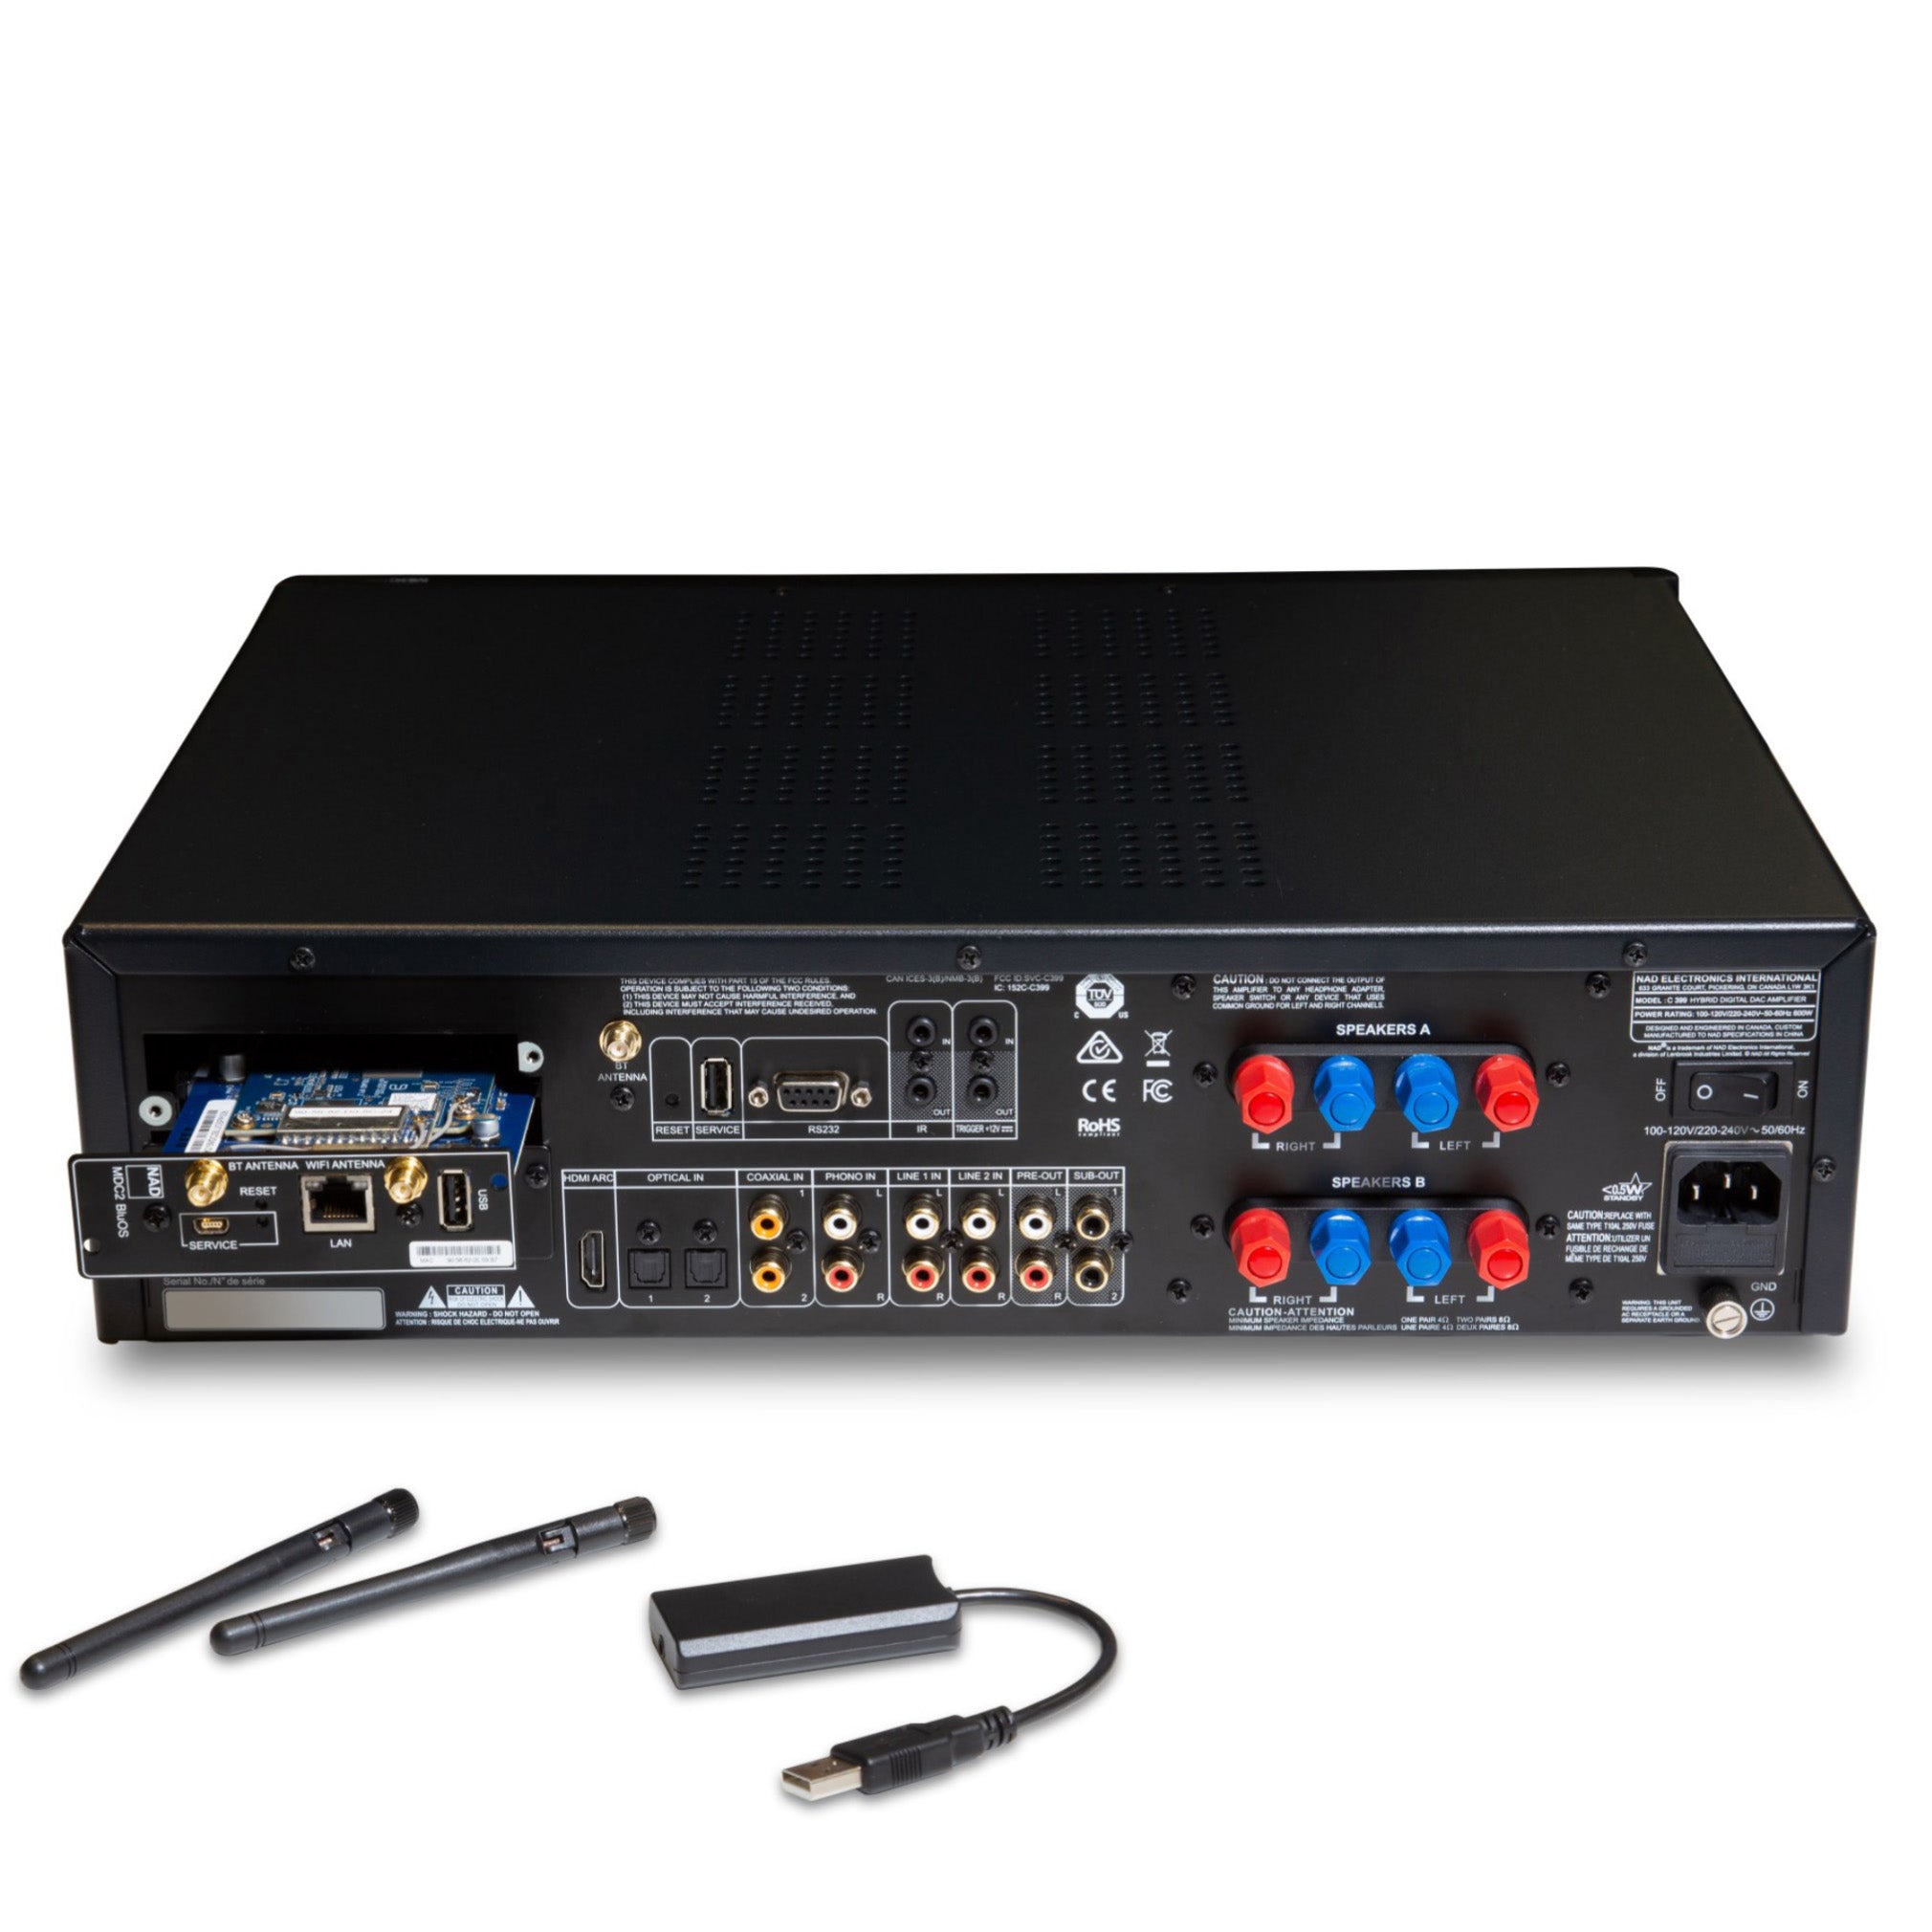 NAD C 399 Hybrid Digital DAC Amplifier with MDC2 BluOS-D Module Installed